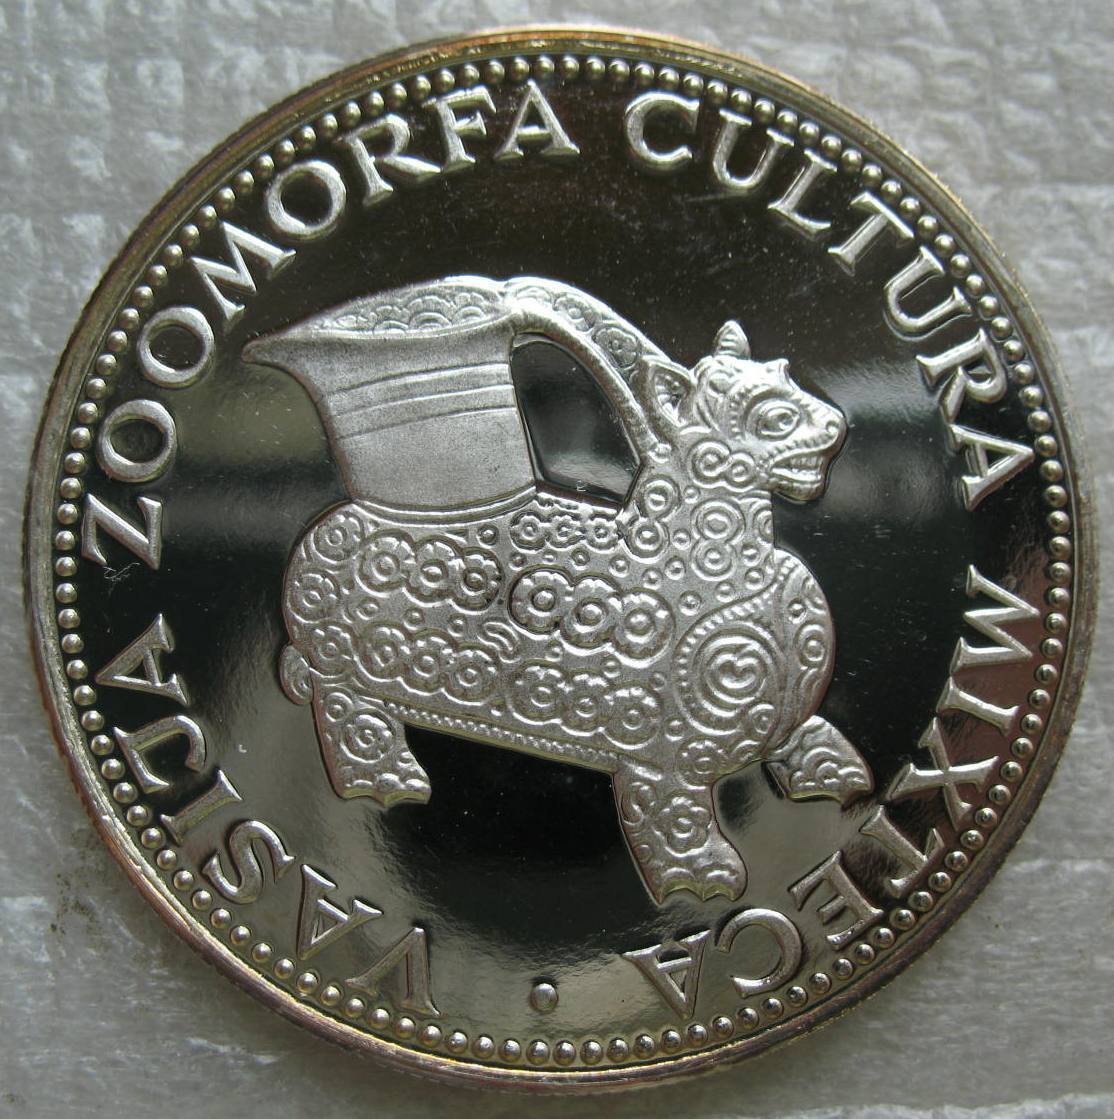 Paraguay 150 Guaranies 1973 Silver Proof Coin Mixteca Culture Animal Sculpture